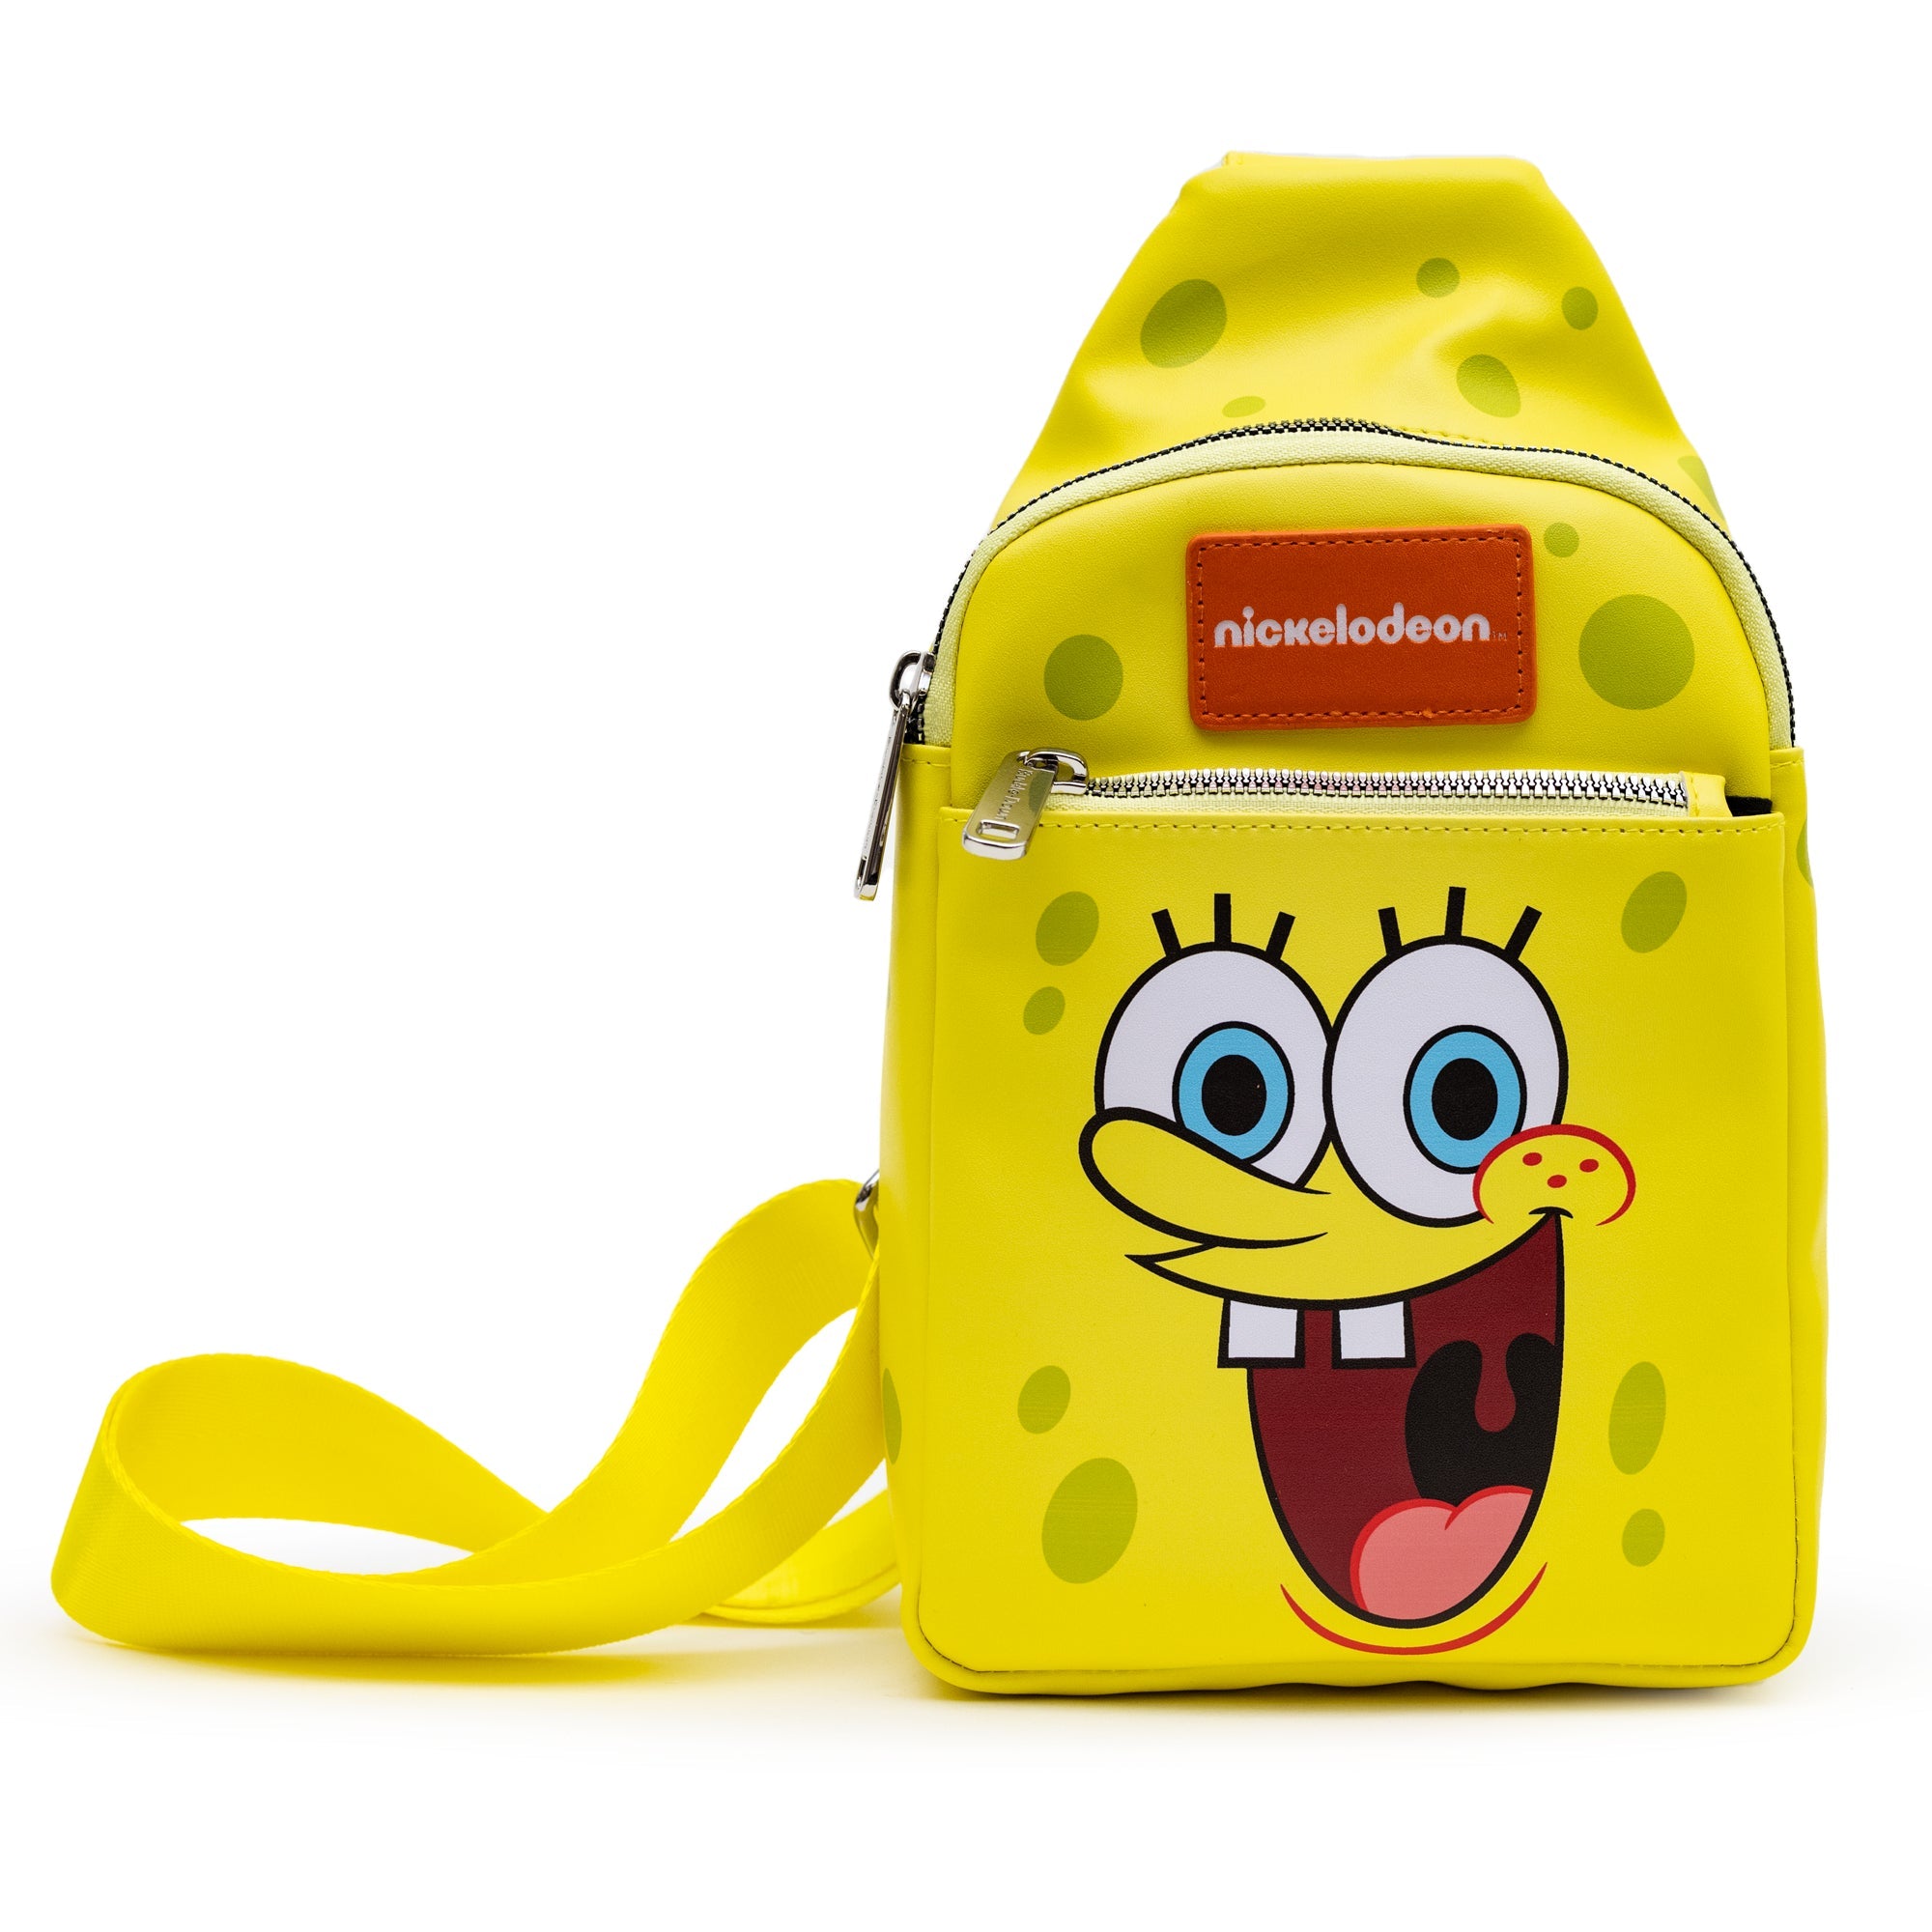 SpongeBob Yellow Character | Leggings